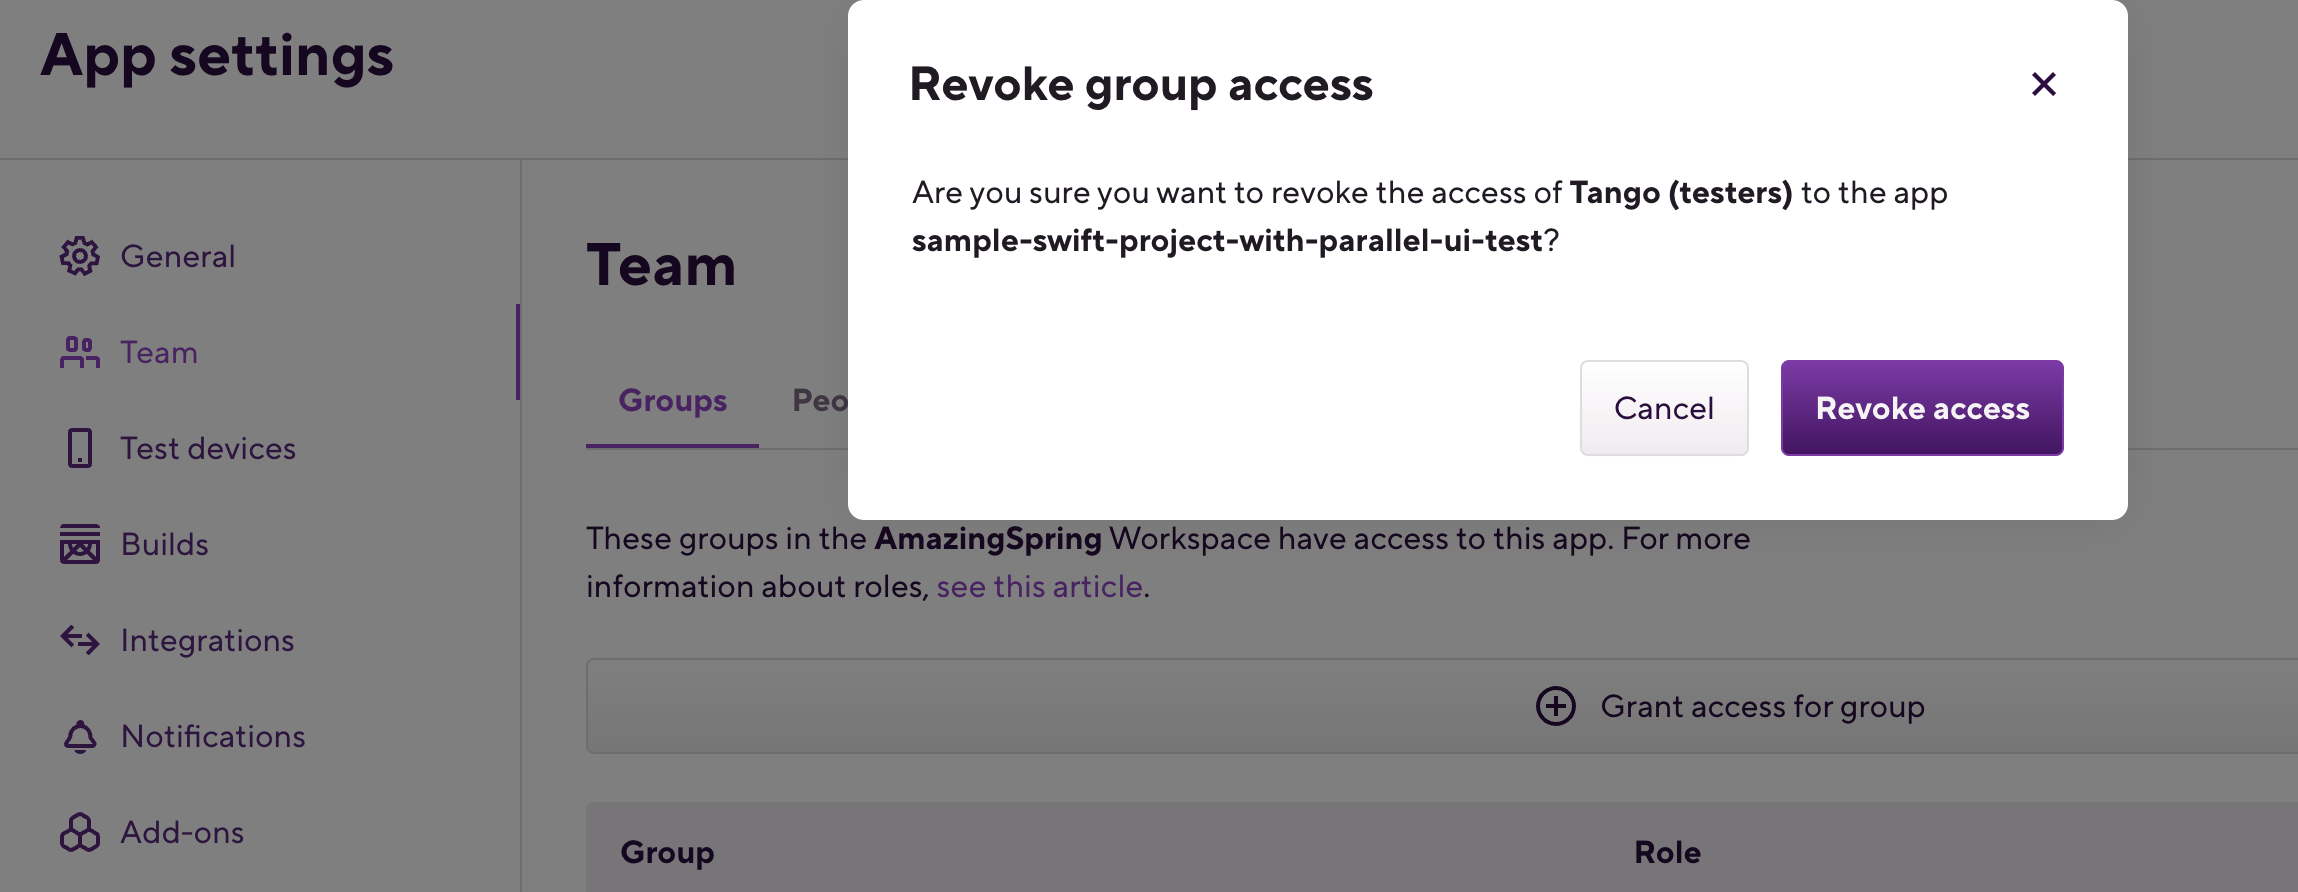 Revoke_access_group.png